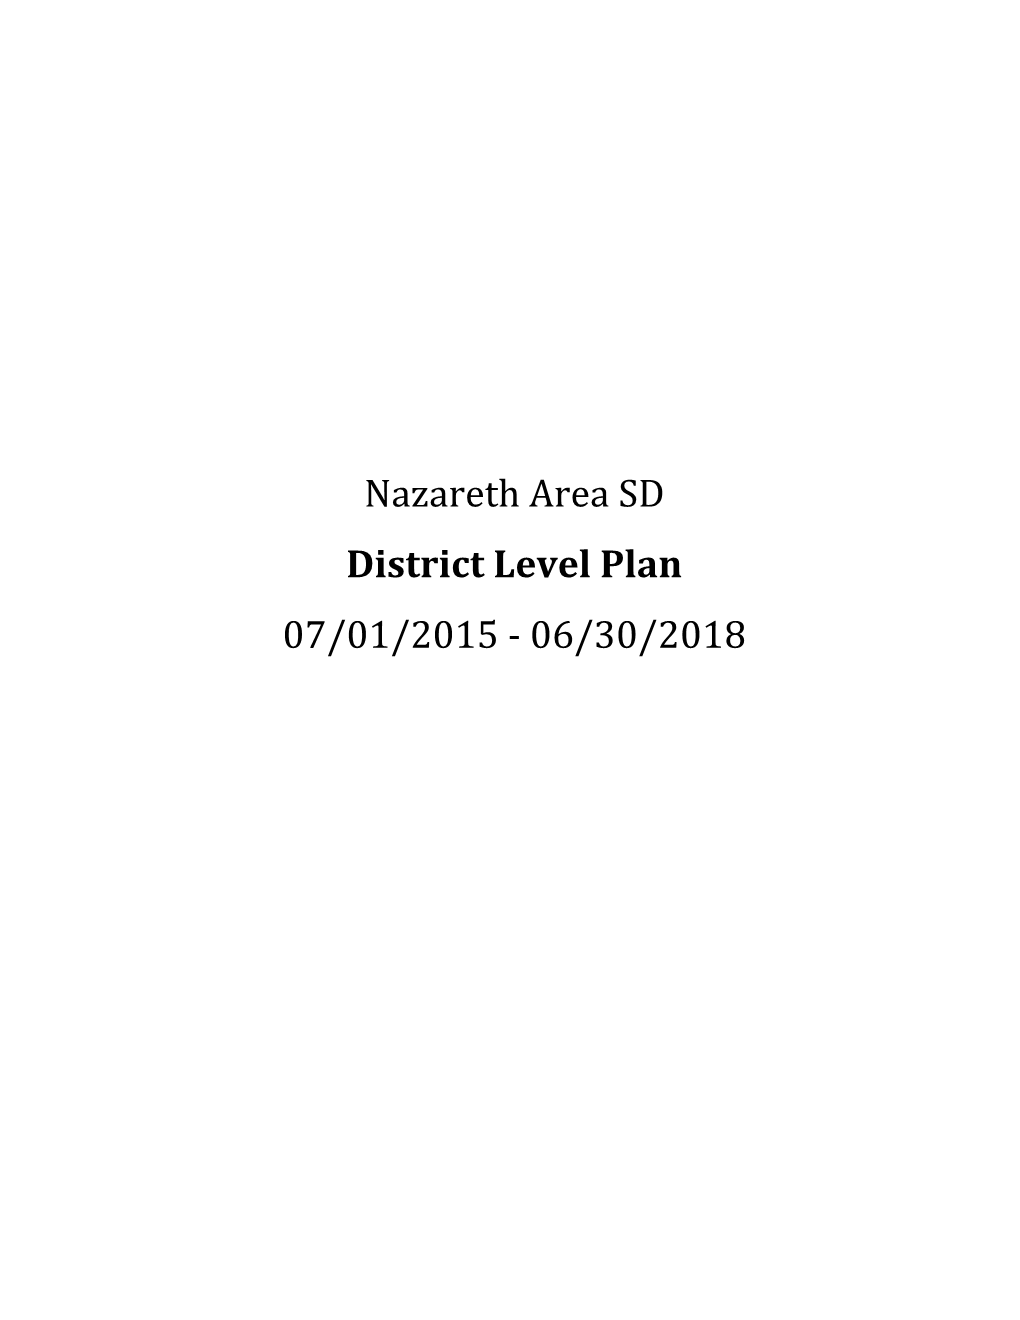 Nazareth Area SD District Level Plan 07/01/2015 ‐ 06/30/2018 2